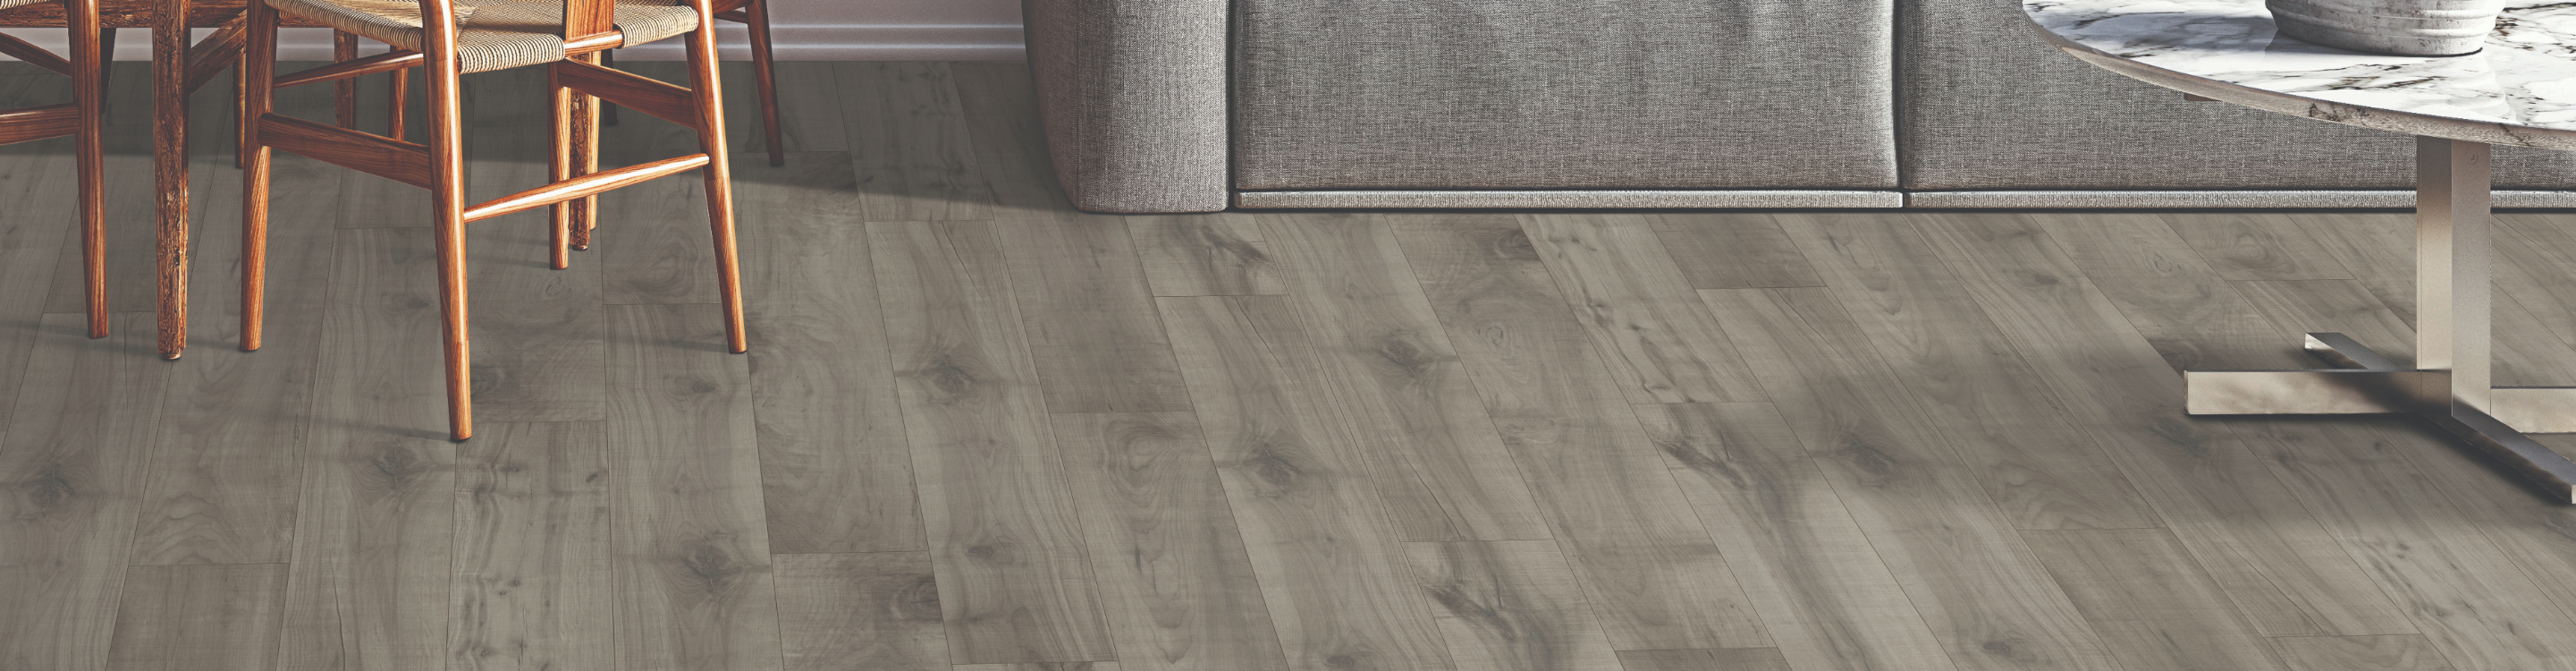 laminate wood-look flooring in a  living space